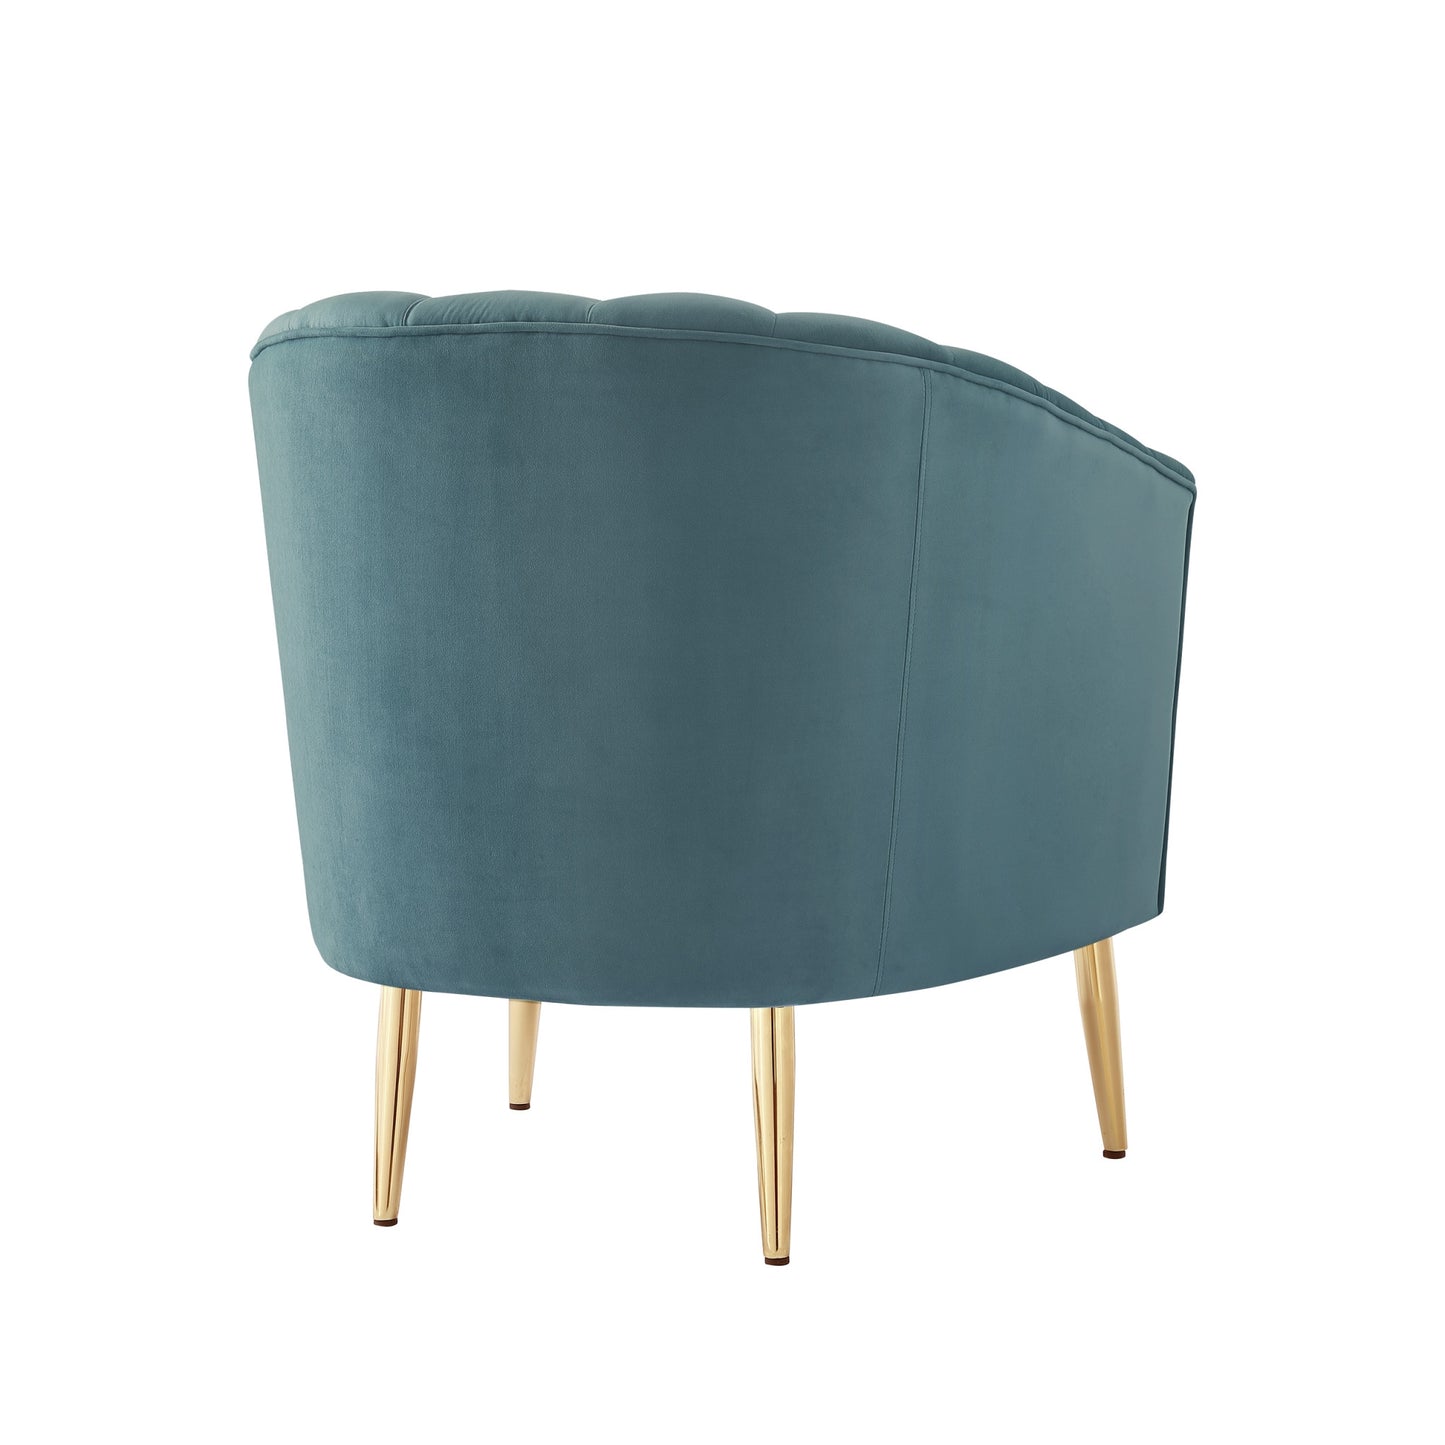 31" Teal Blue And Gold Velvet Tufted Barrel Chair